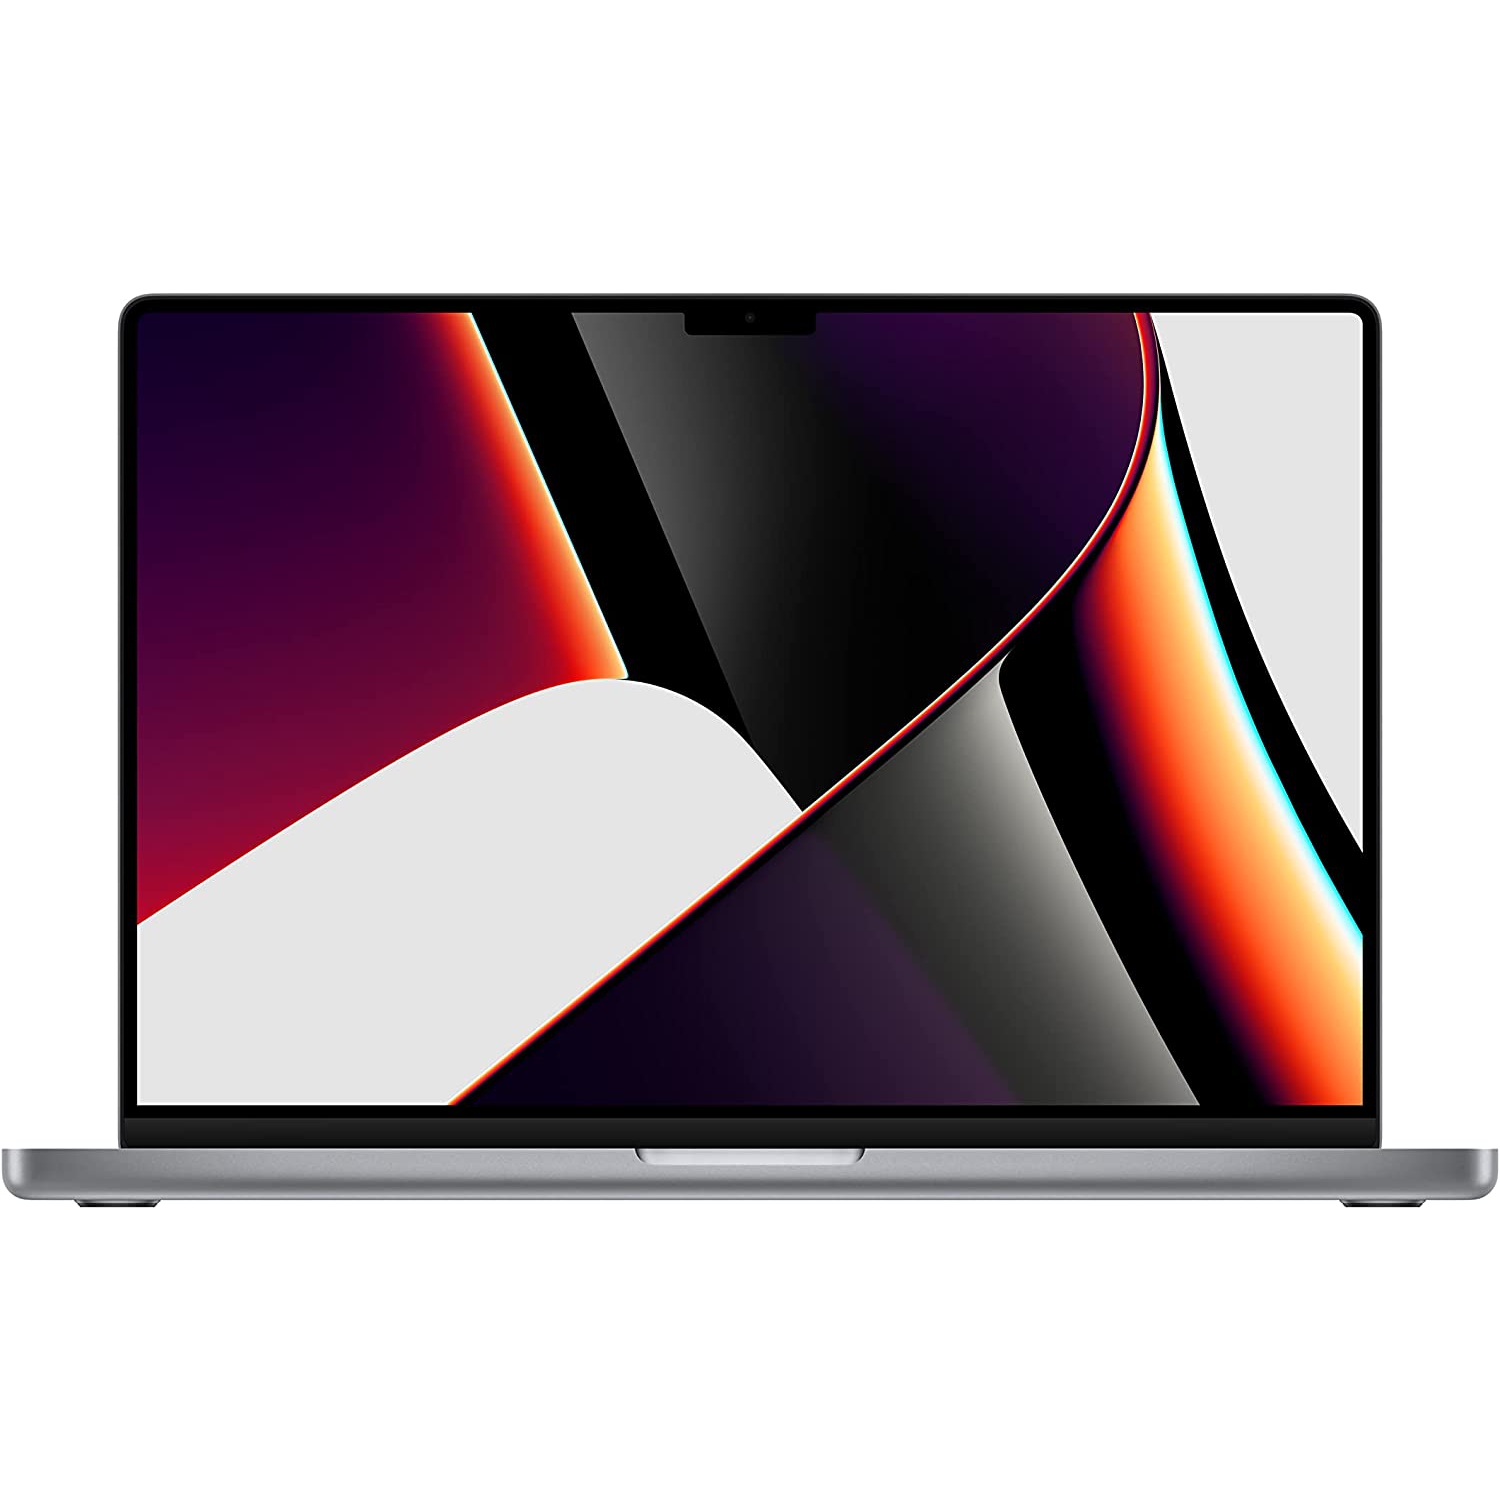 Apple MacBook Pro 16" (2021) - Space Grey (Apple M1 Pro Chip / 512GB SSD / 16GB RAM) - English- Brand New